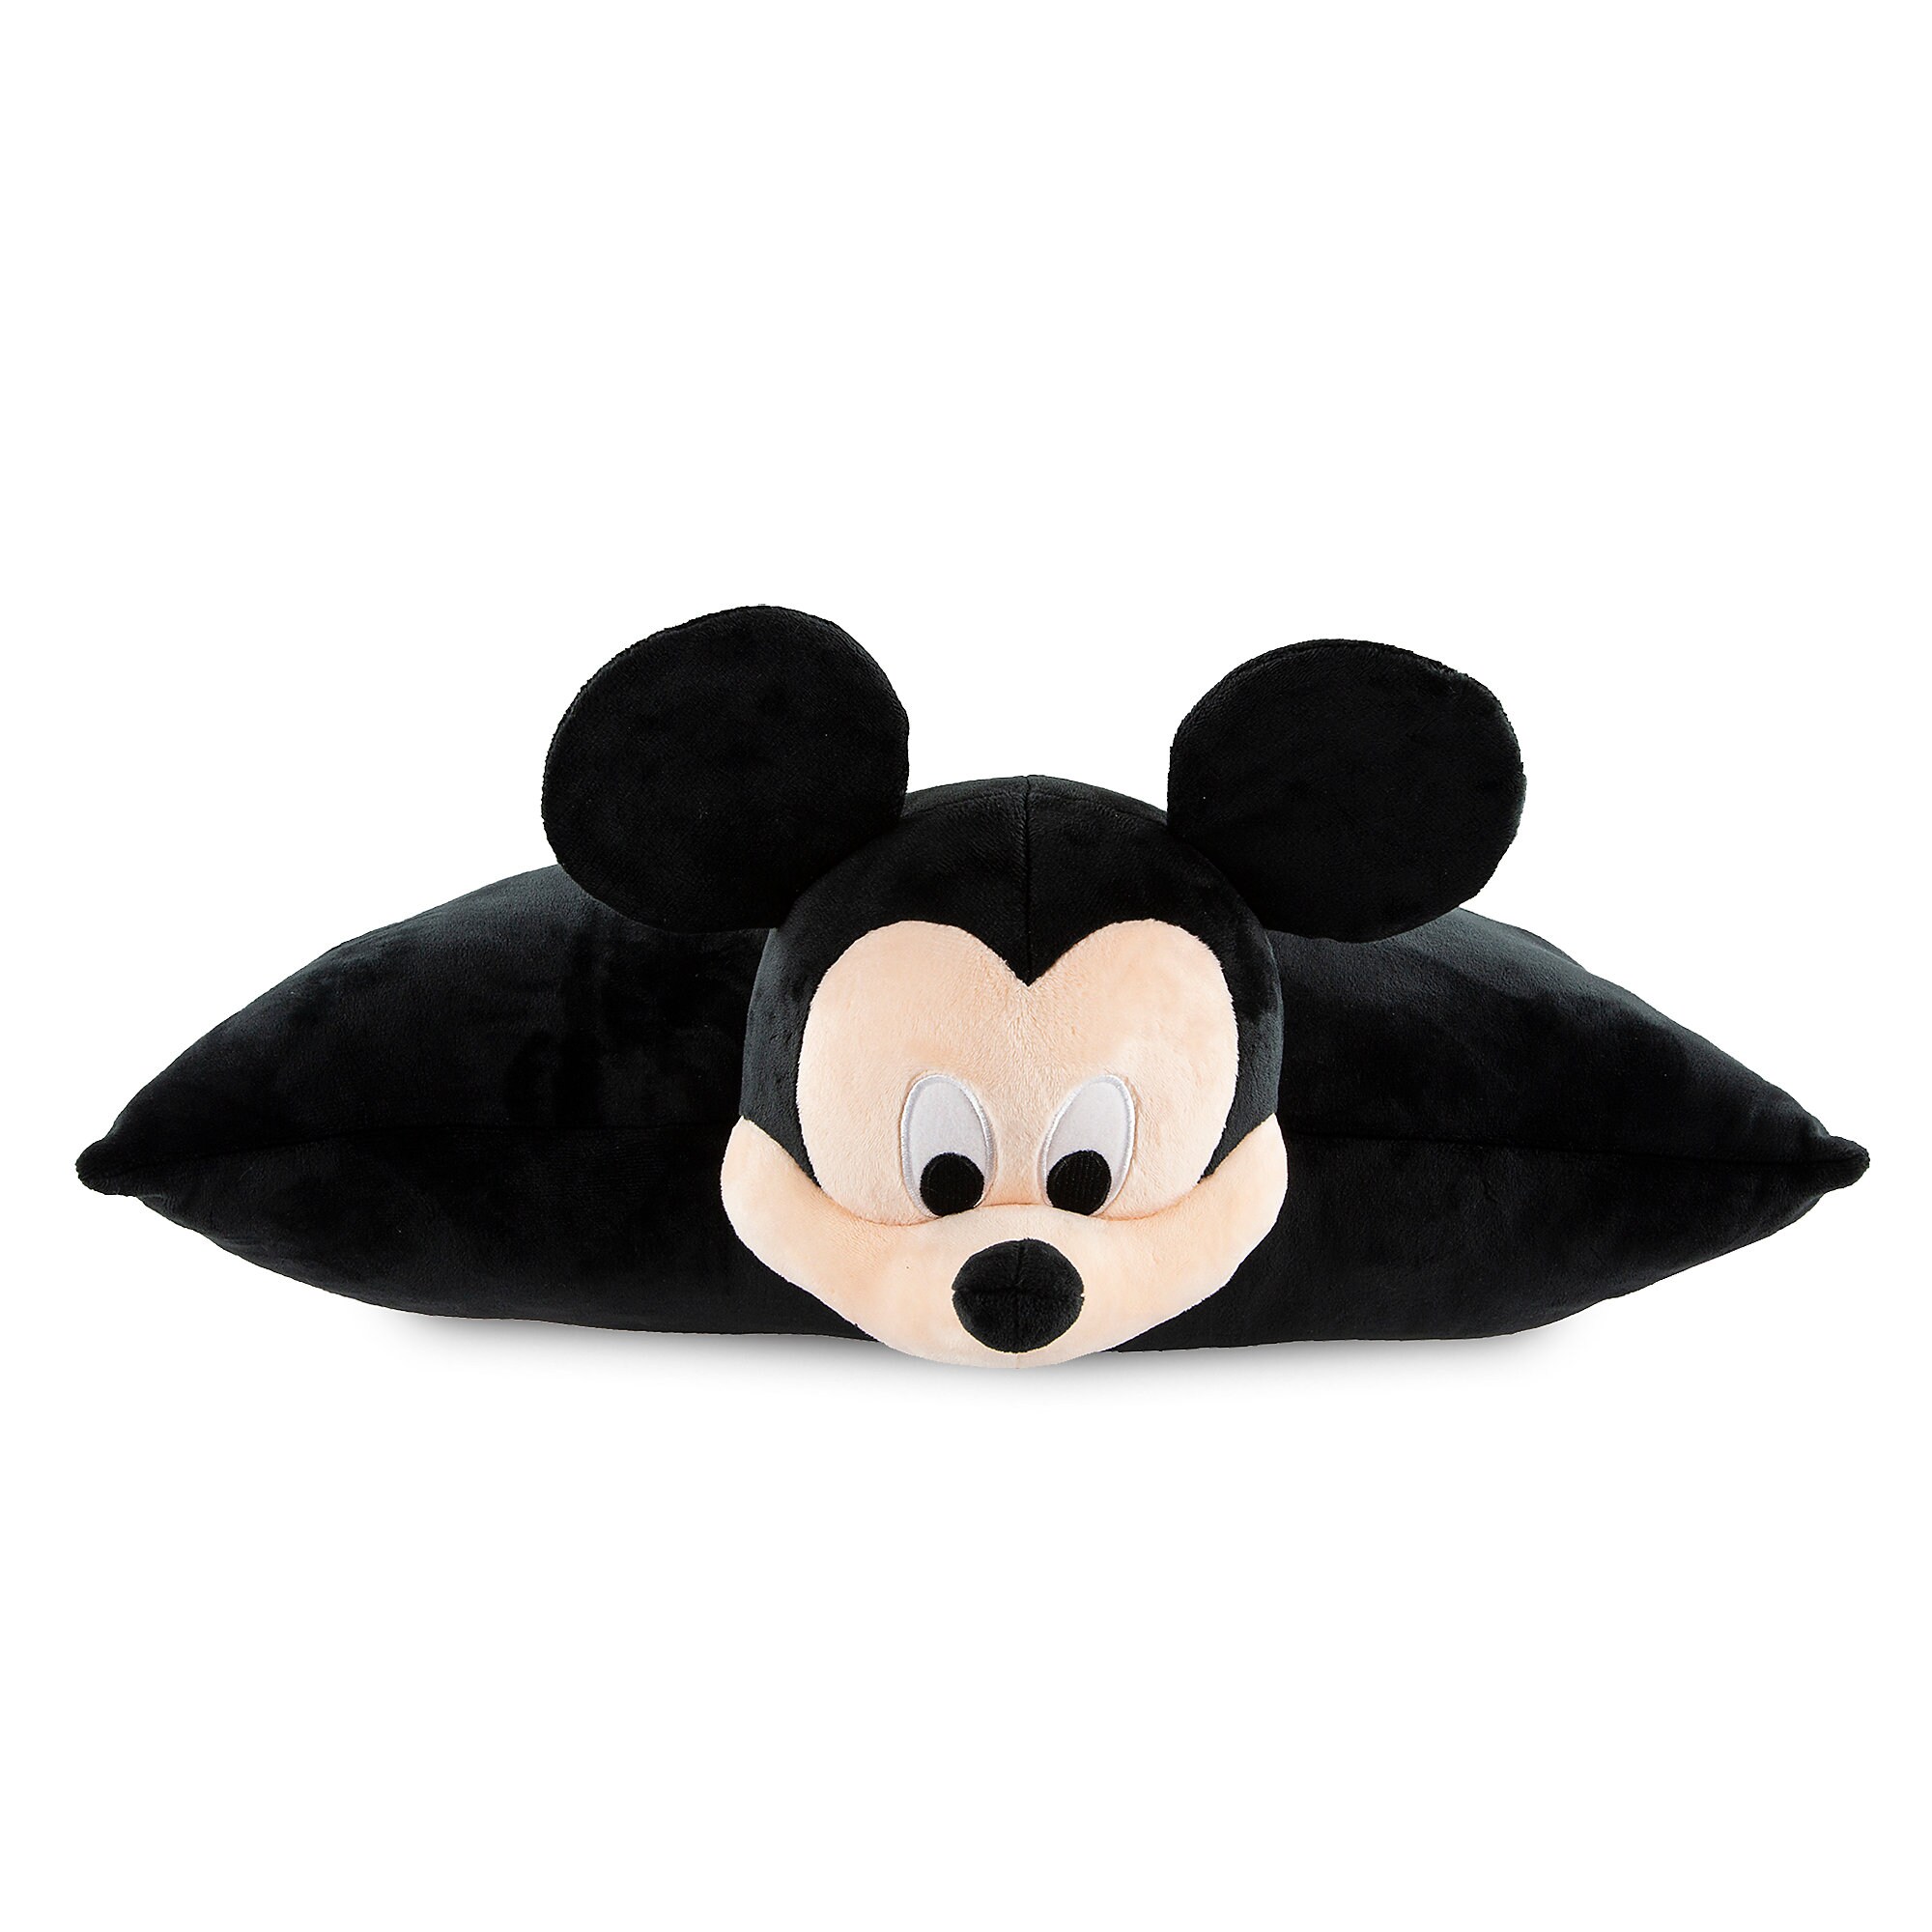 Mickey Mouse Plush Pillow